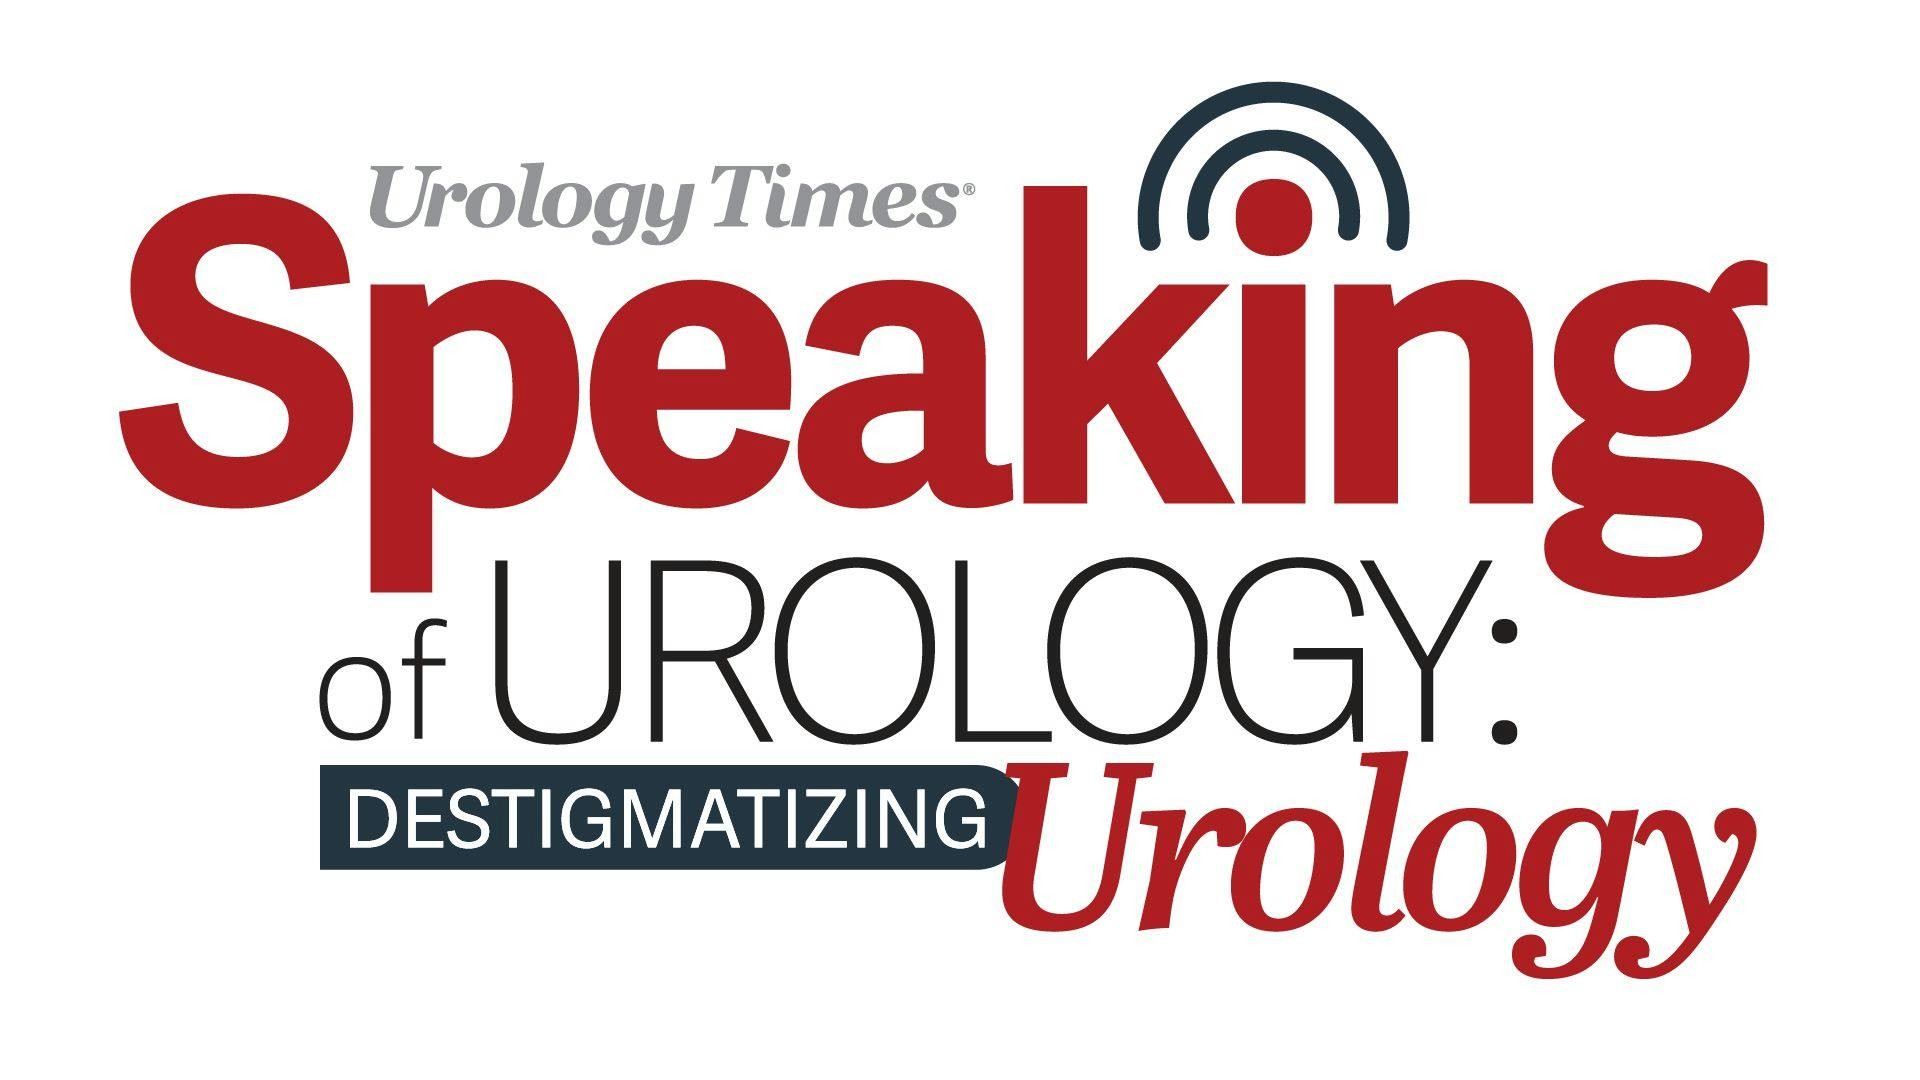 Destigmatizing Urology: Dr. Amarasekera discusses sexual minorities in urology